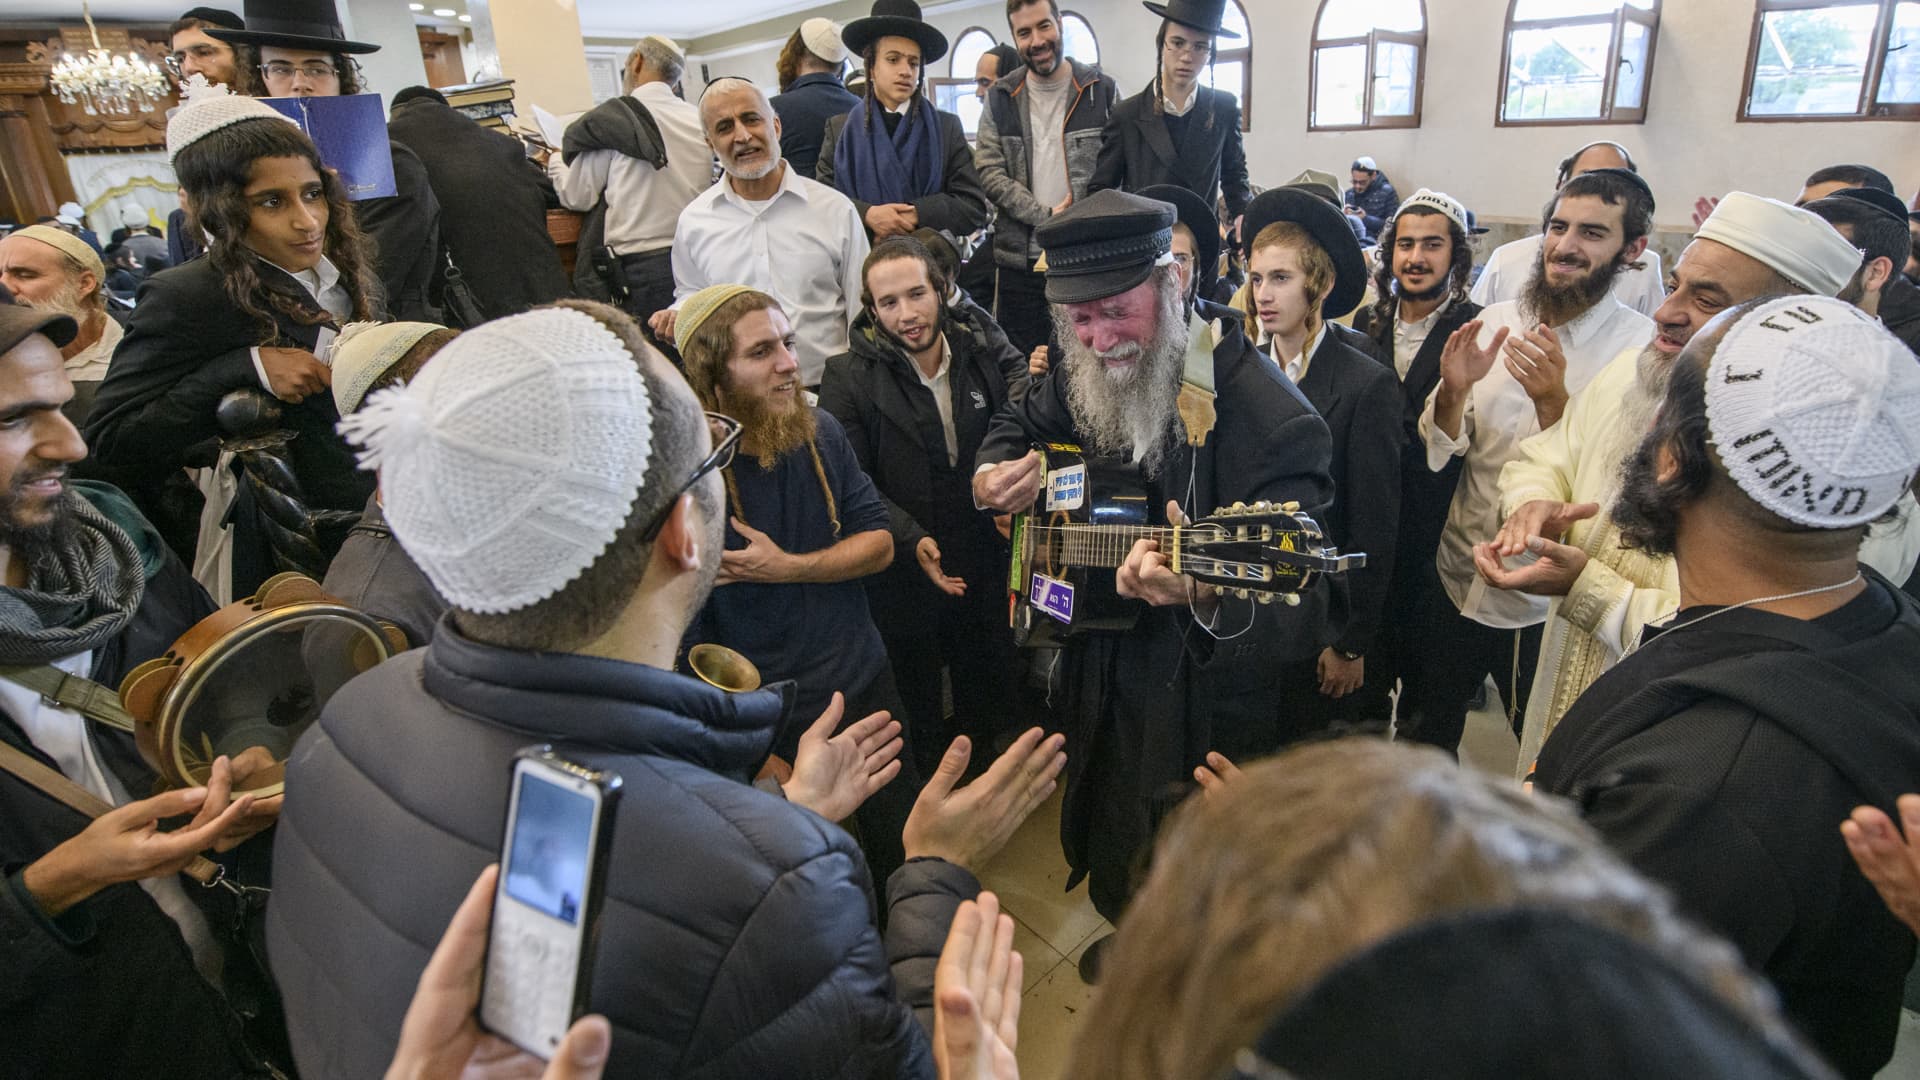 Orthodox Jewish pilgrims celebrate near the tomb of Rabbi Nachman while celebrating Rosh Hashanah, the Jewish New Year, amid Russia continues the war in Ukraine. Uman, Ukraine, September 25, 2022 